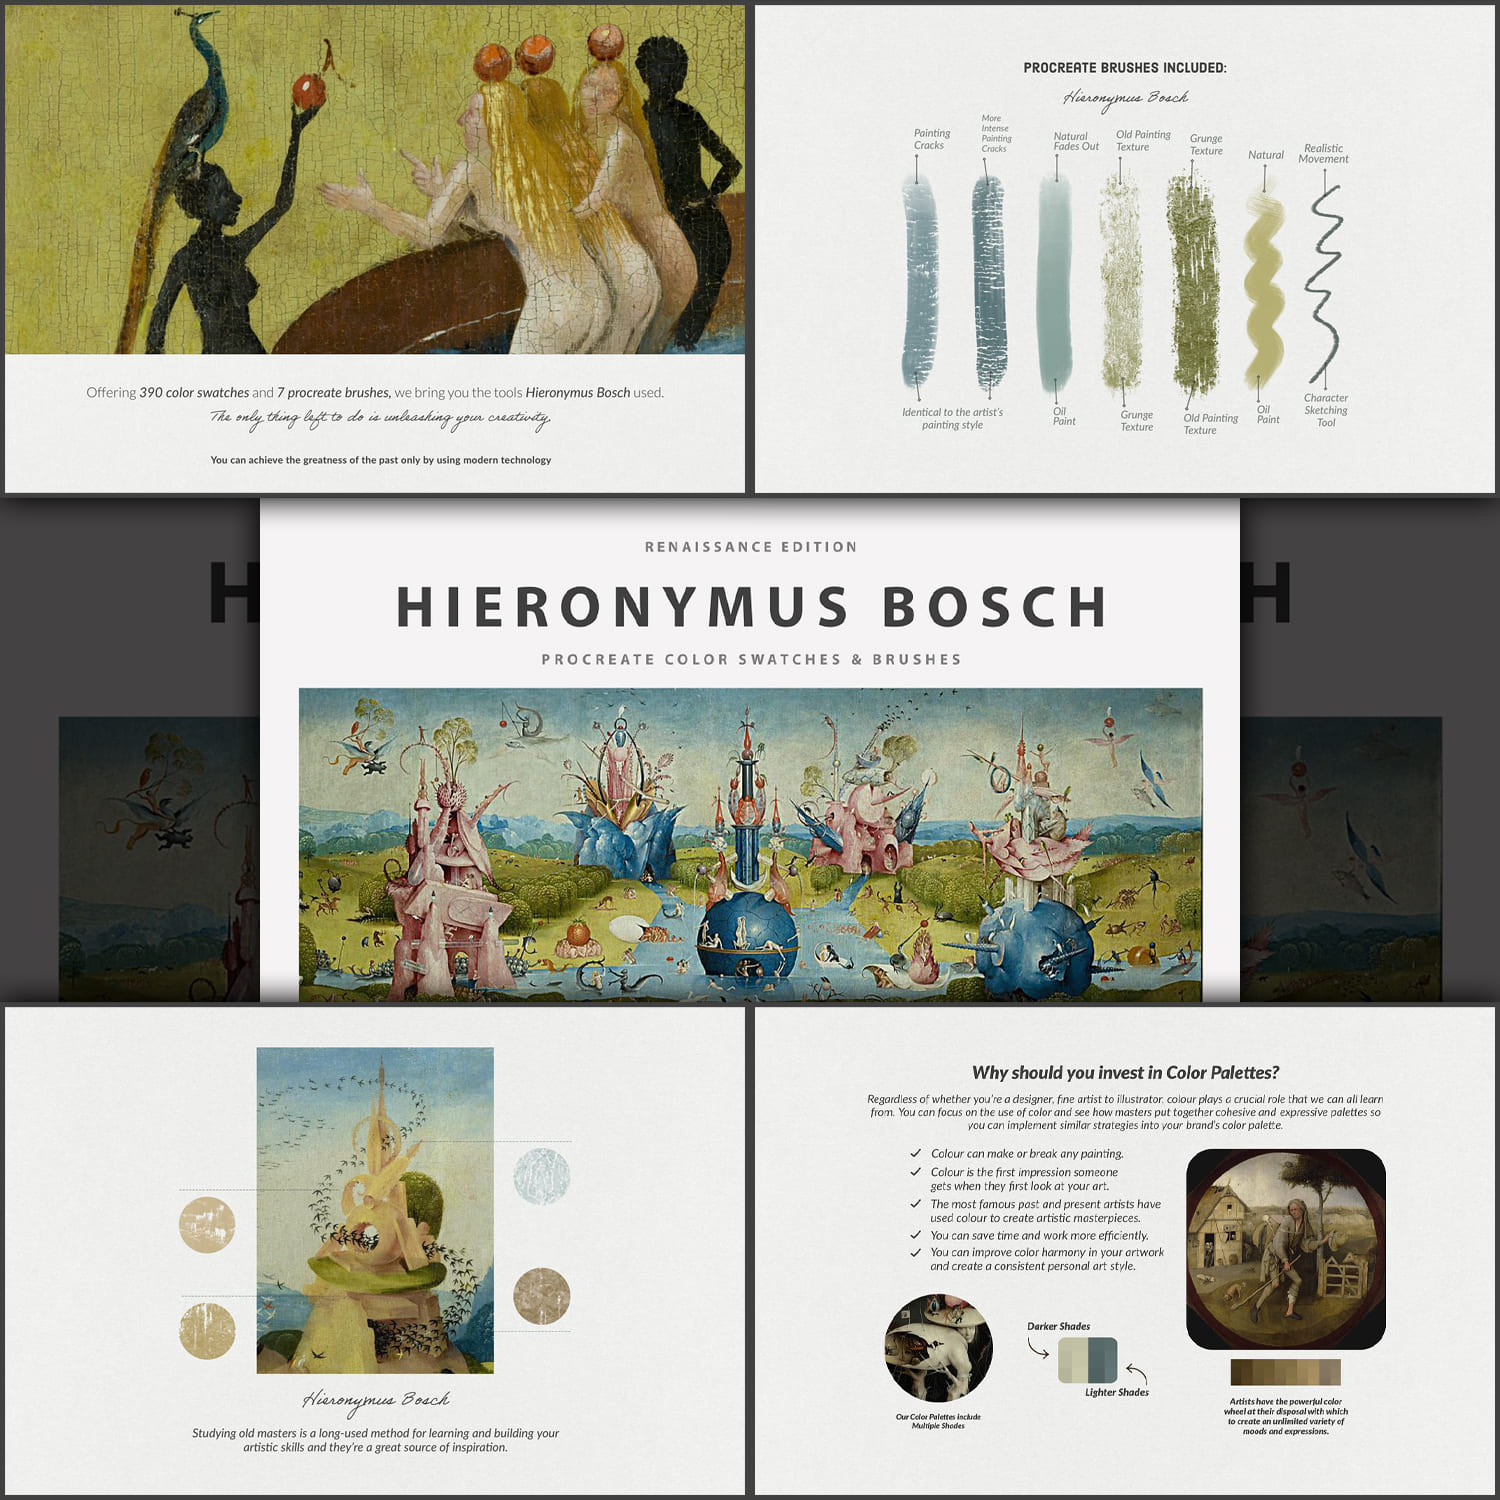 Hieronymus Bosch Procreate Brushes.